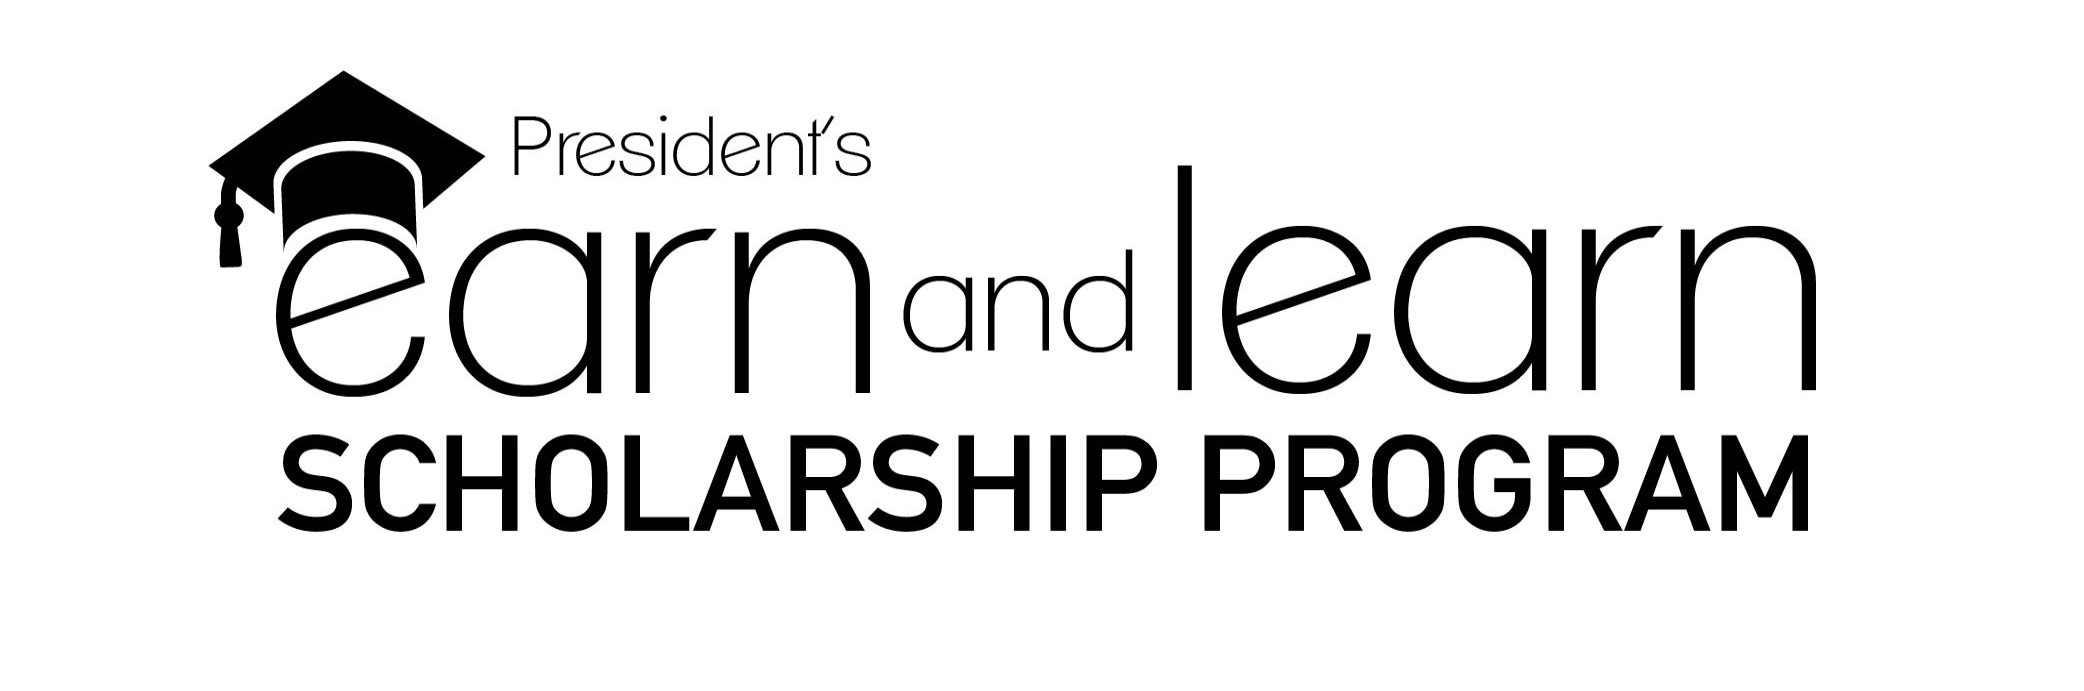 President's Earn and Learn Scholarship Program